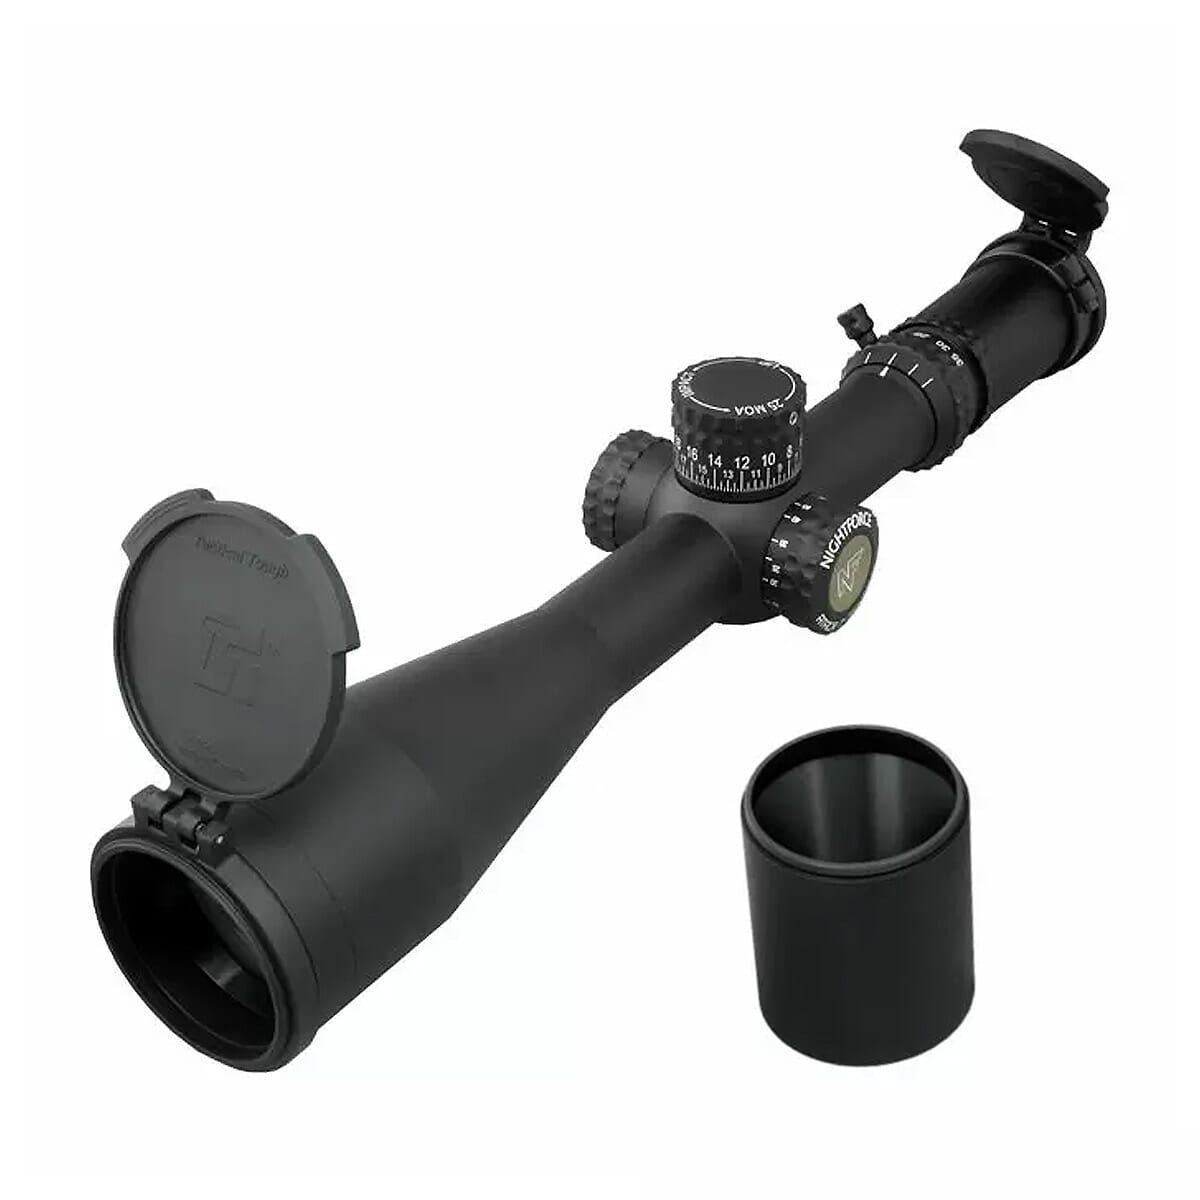 Nightforce ATACR 7-35x56 F1 ZeroStop .250 MOA Illum PTL MOAR Riflescope w/Flip Up Covers/Sunshade C569